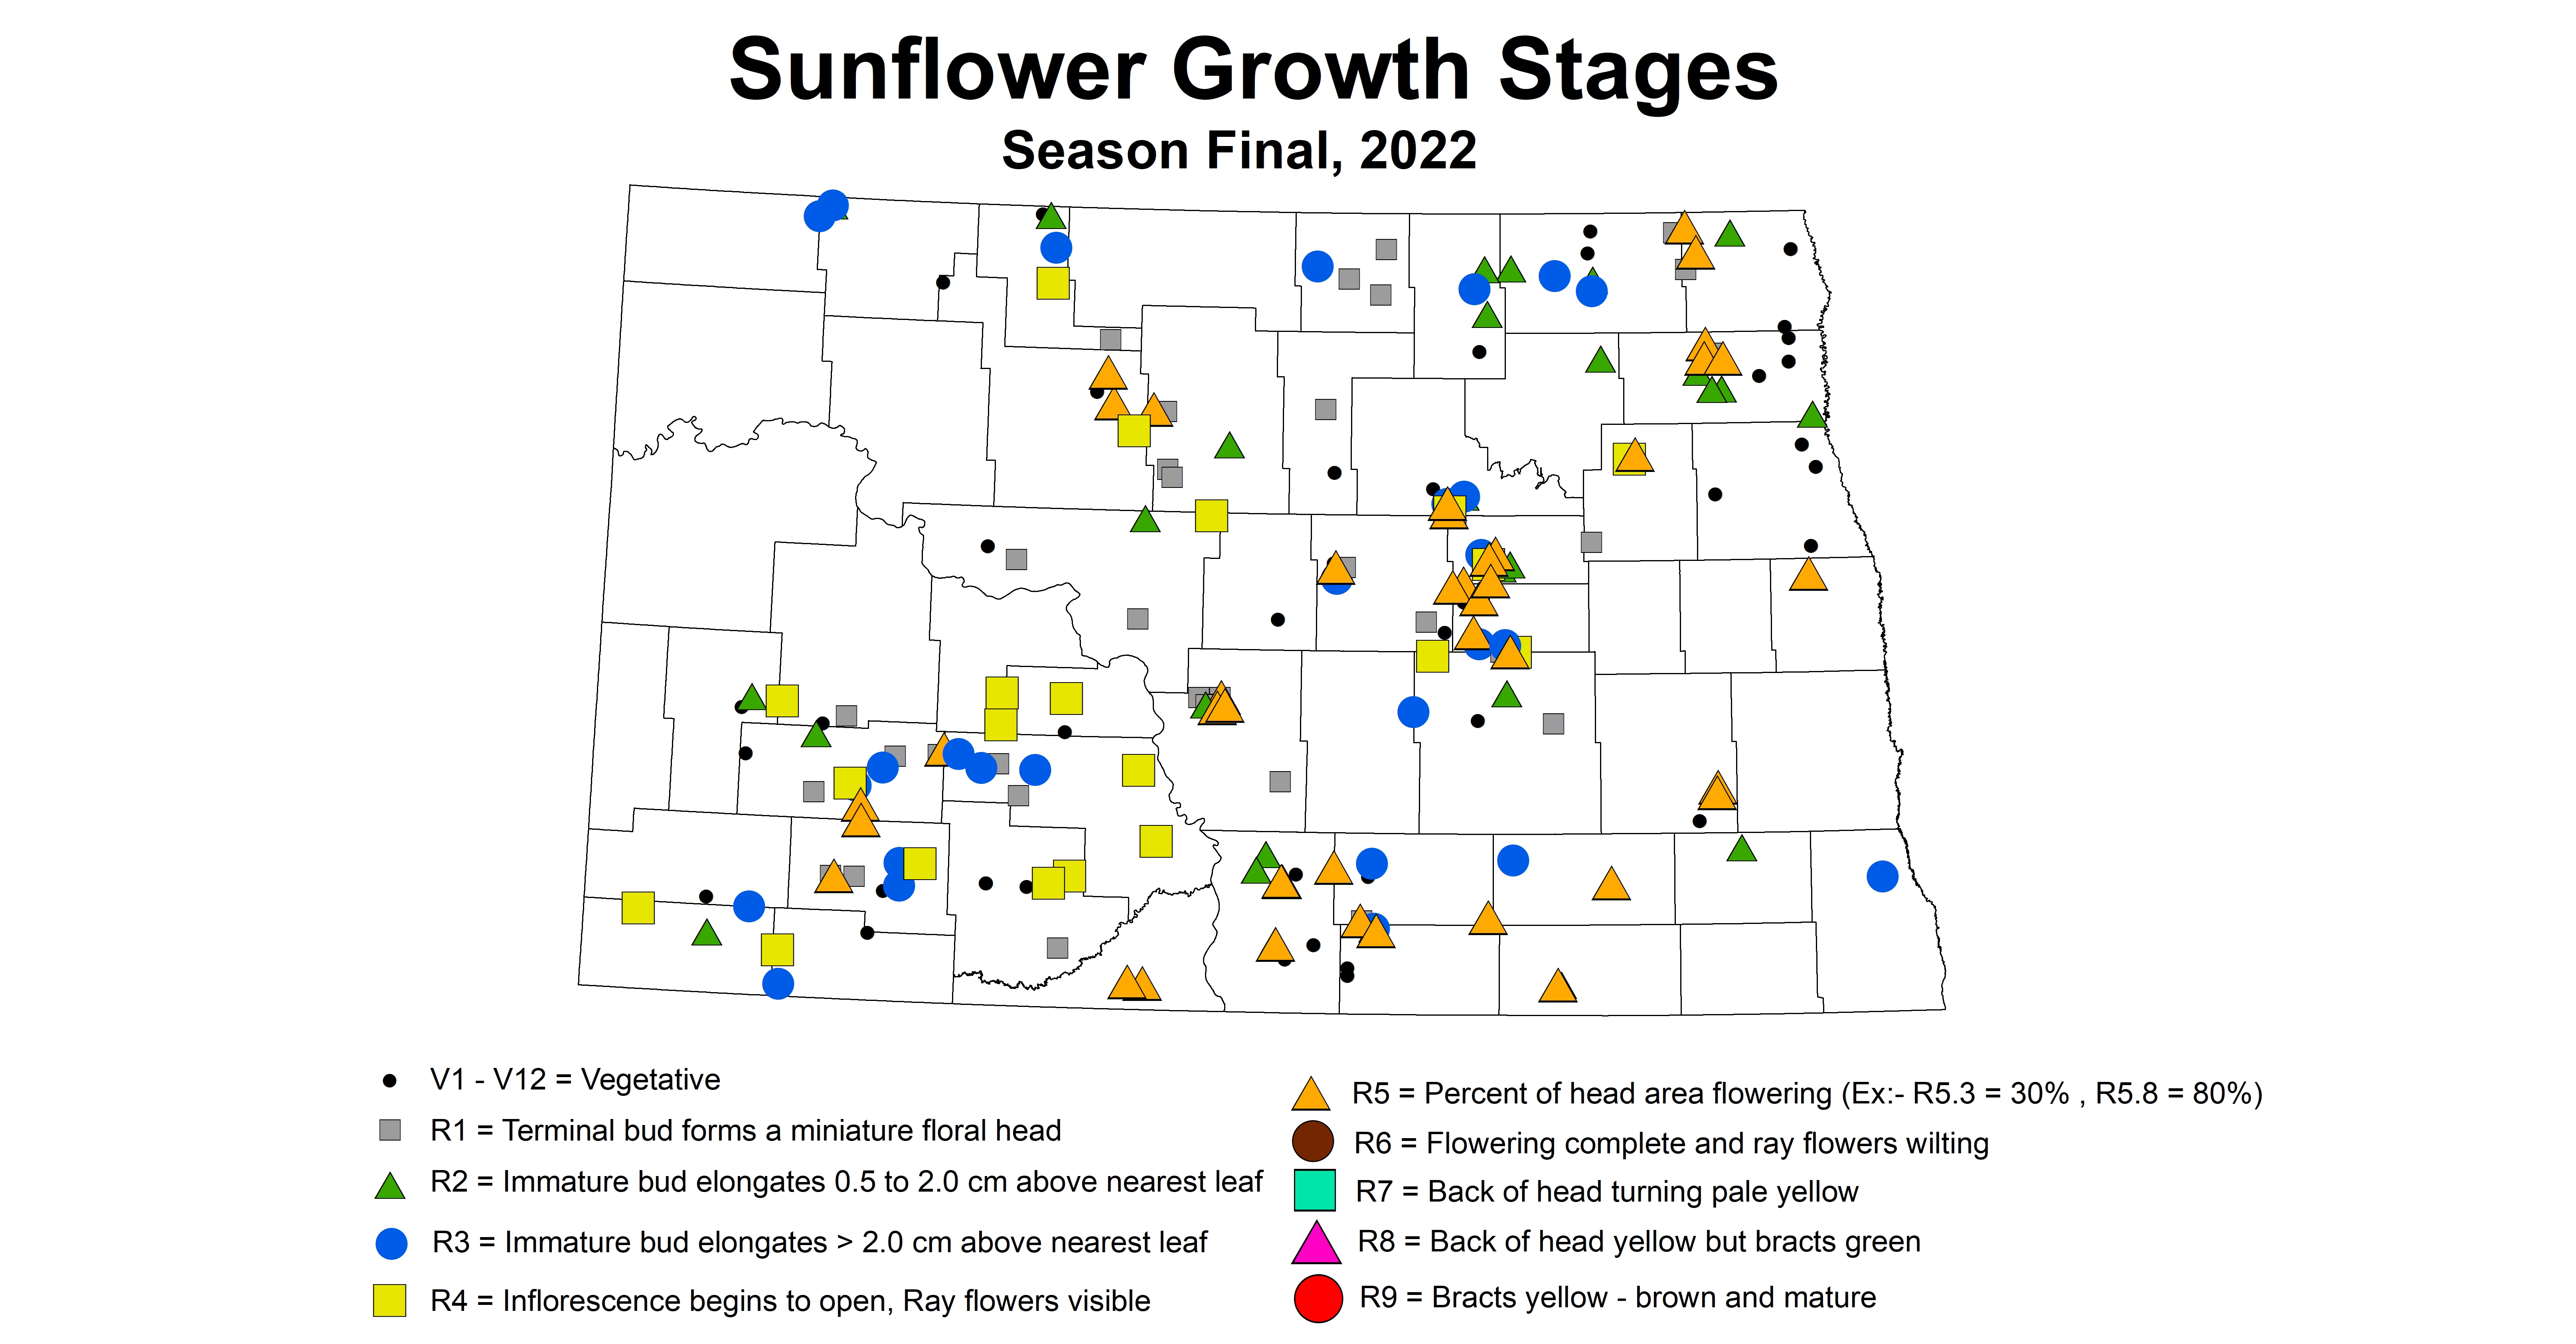 sunflower growth stage 2022 season final